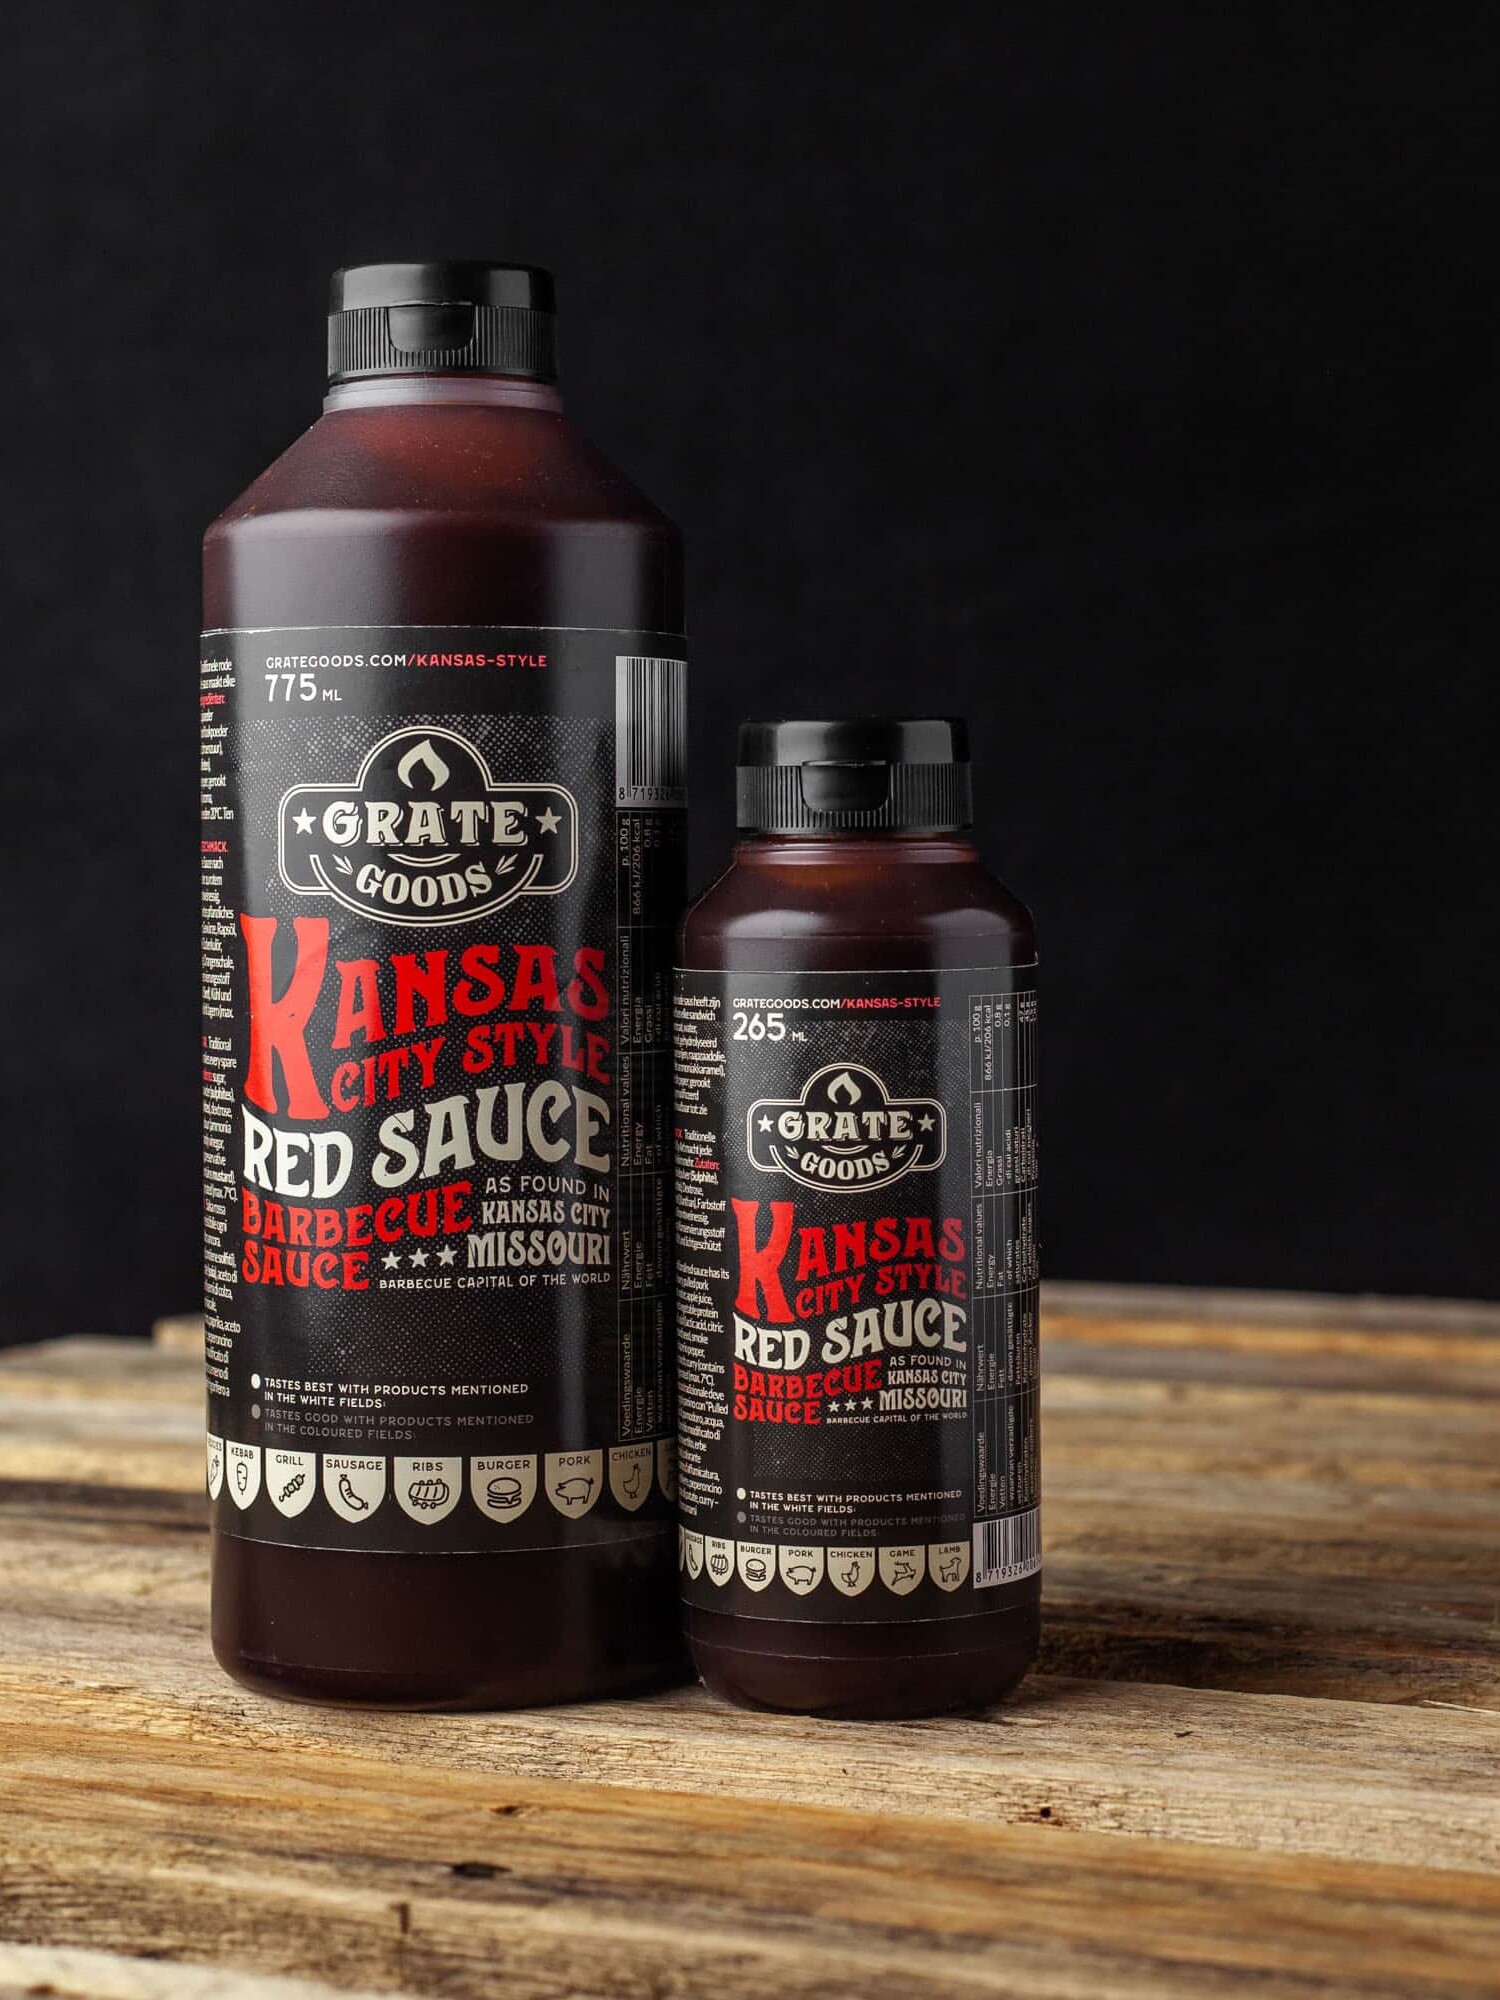 Grate Goods - Kansas city style red sauce